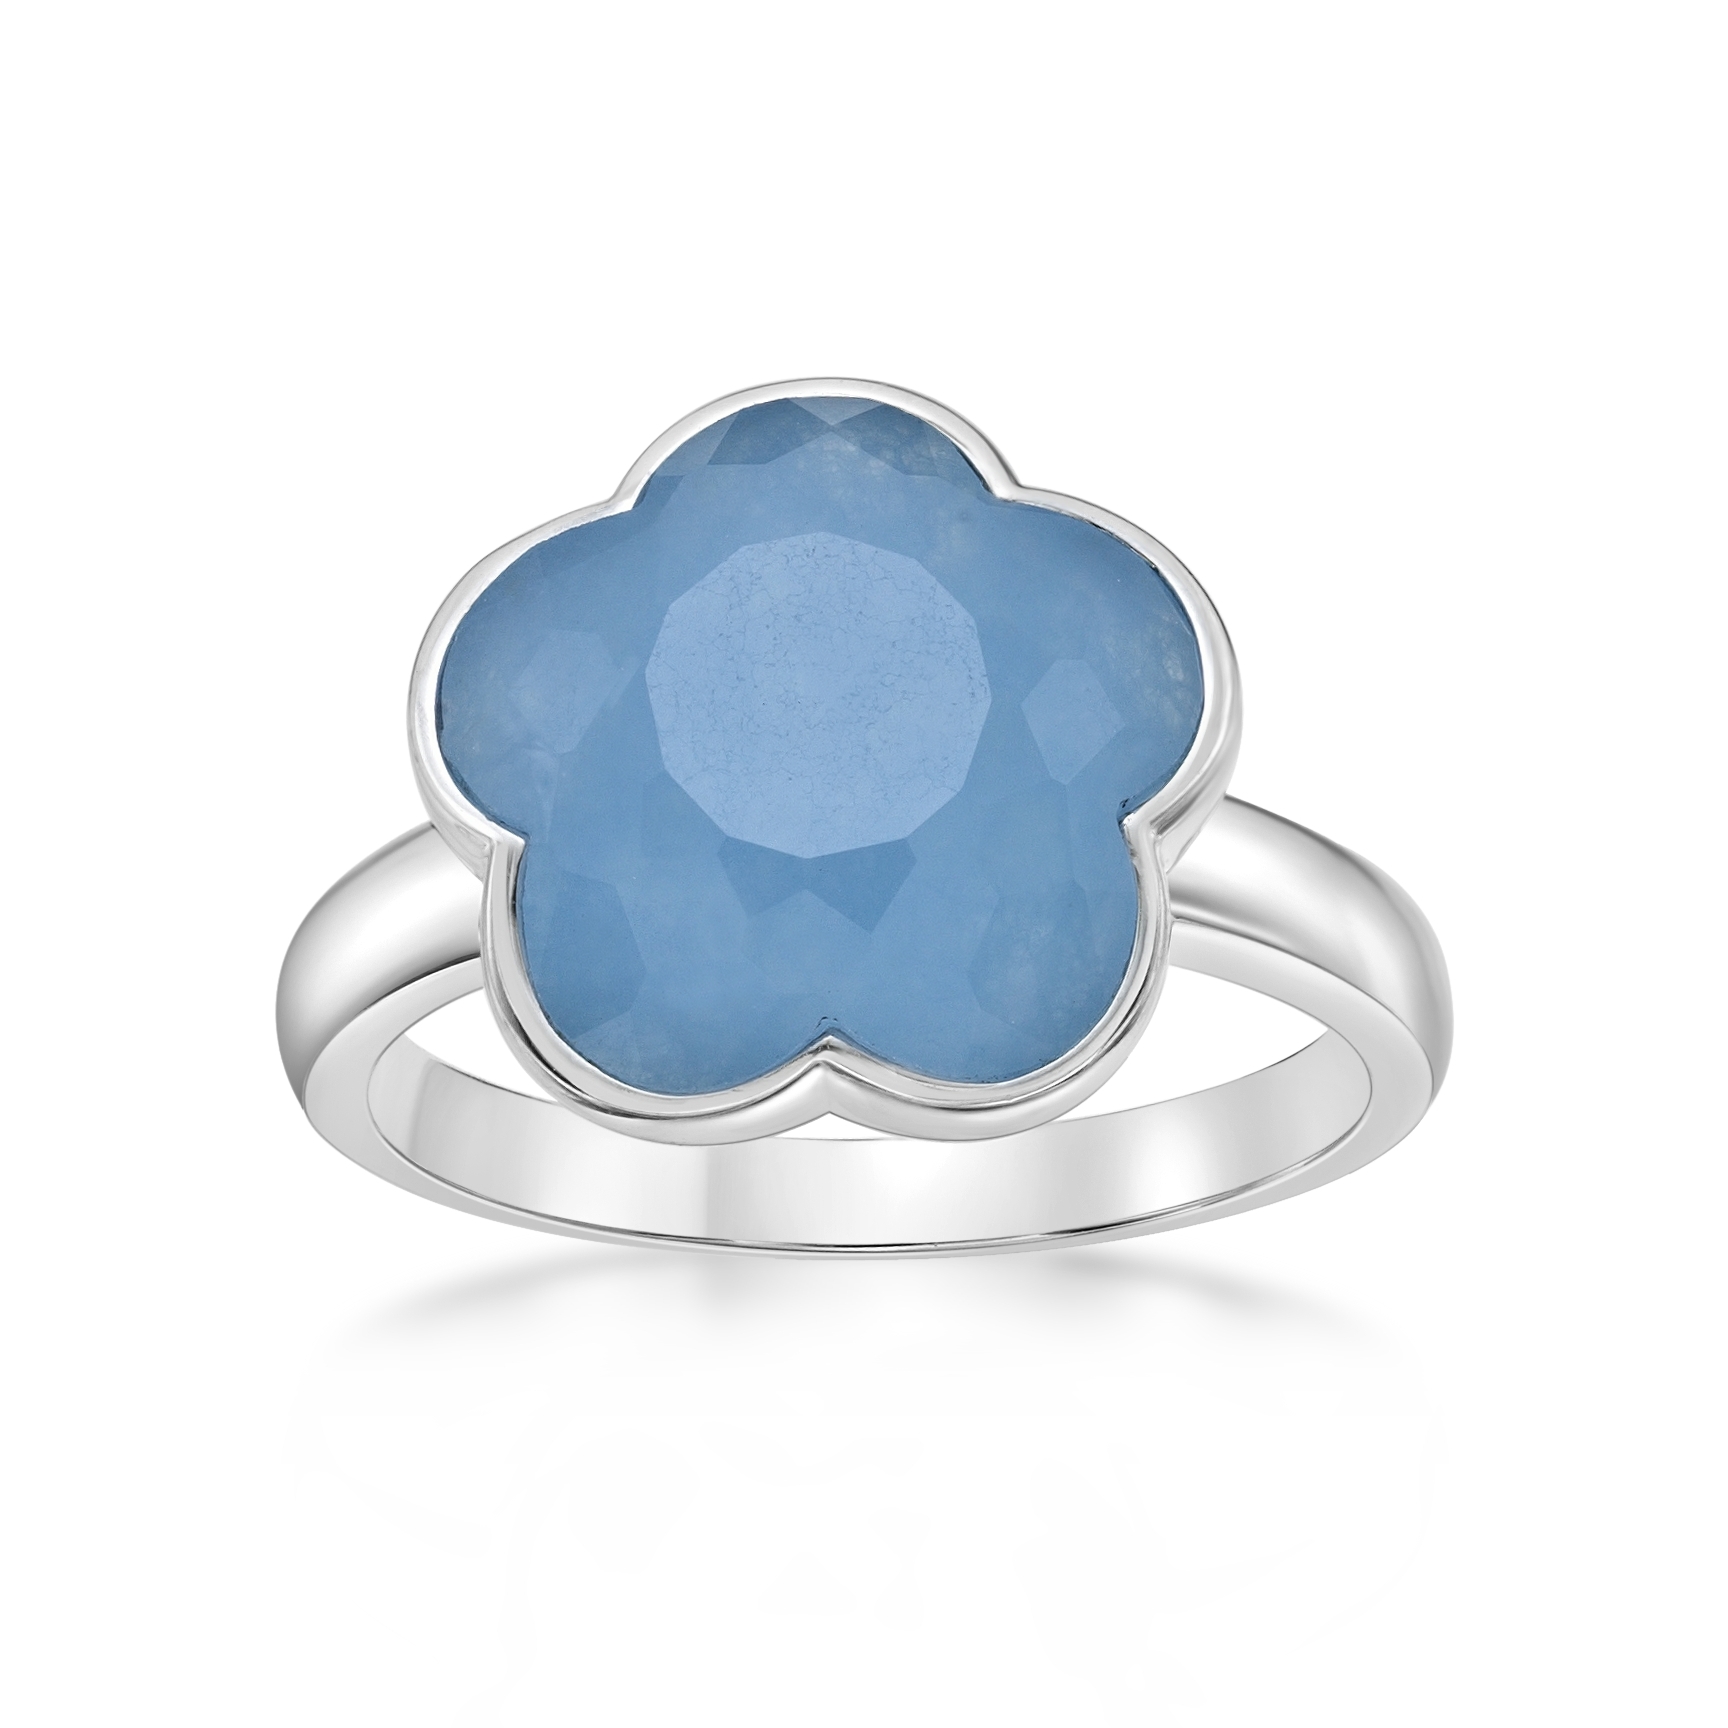 Lavari Jewelers Women’s Blue Quartz Five Petal Flower Ring, 925 Sterling Silver, Size 6